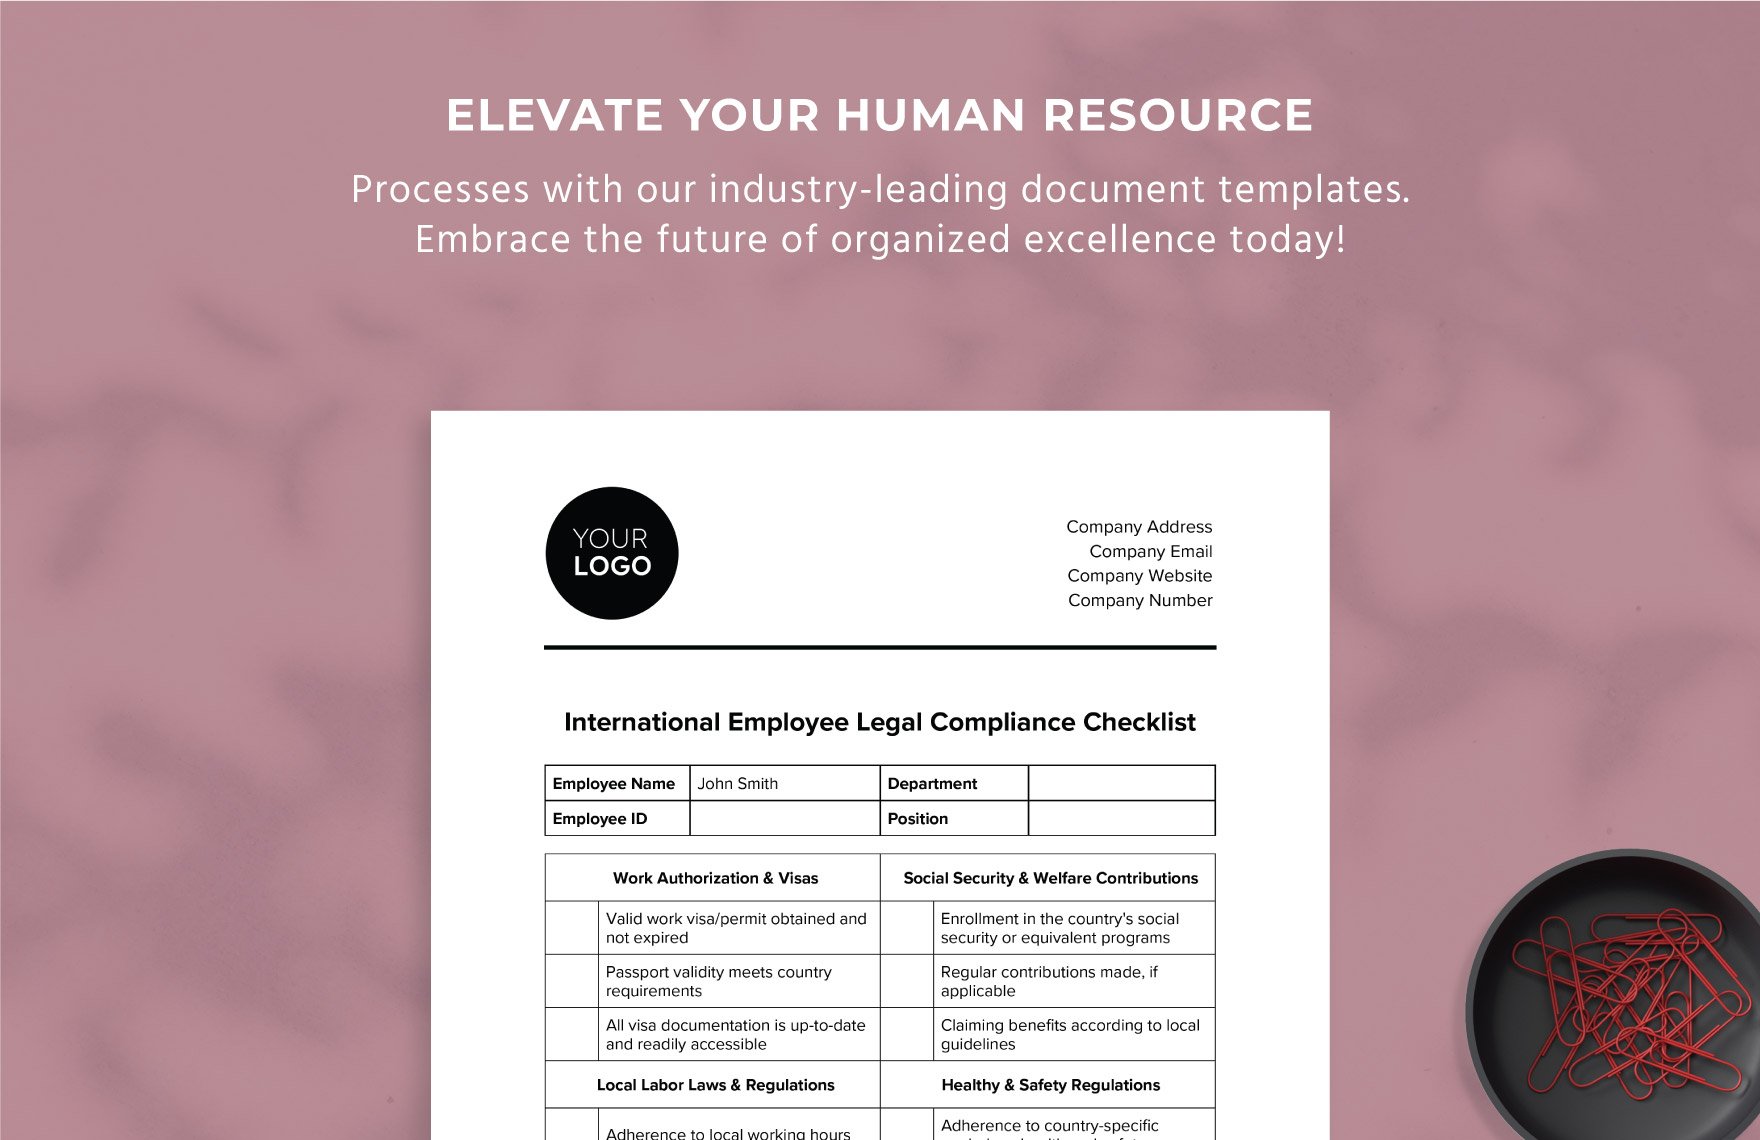 International Employee Legal Compliance Checklist HR Template